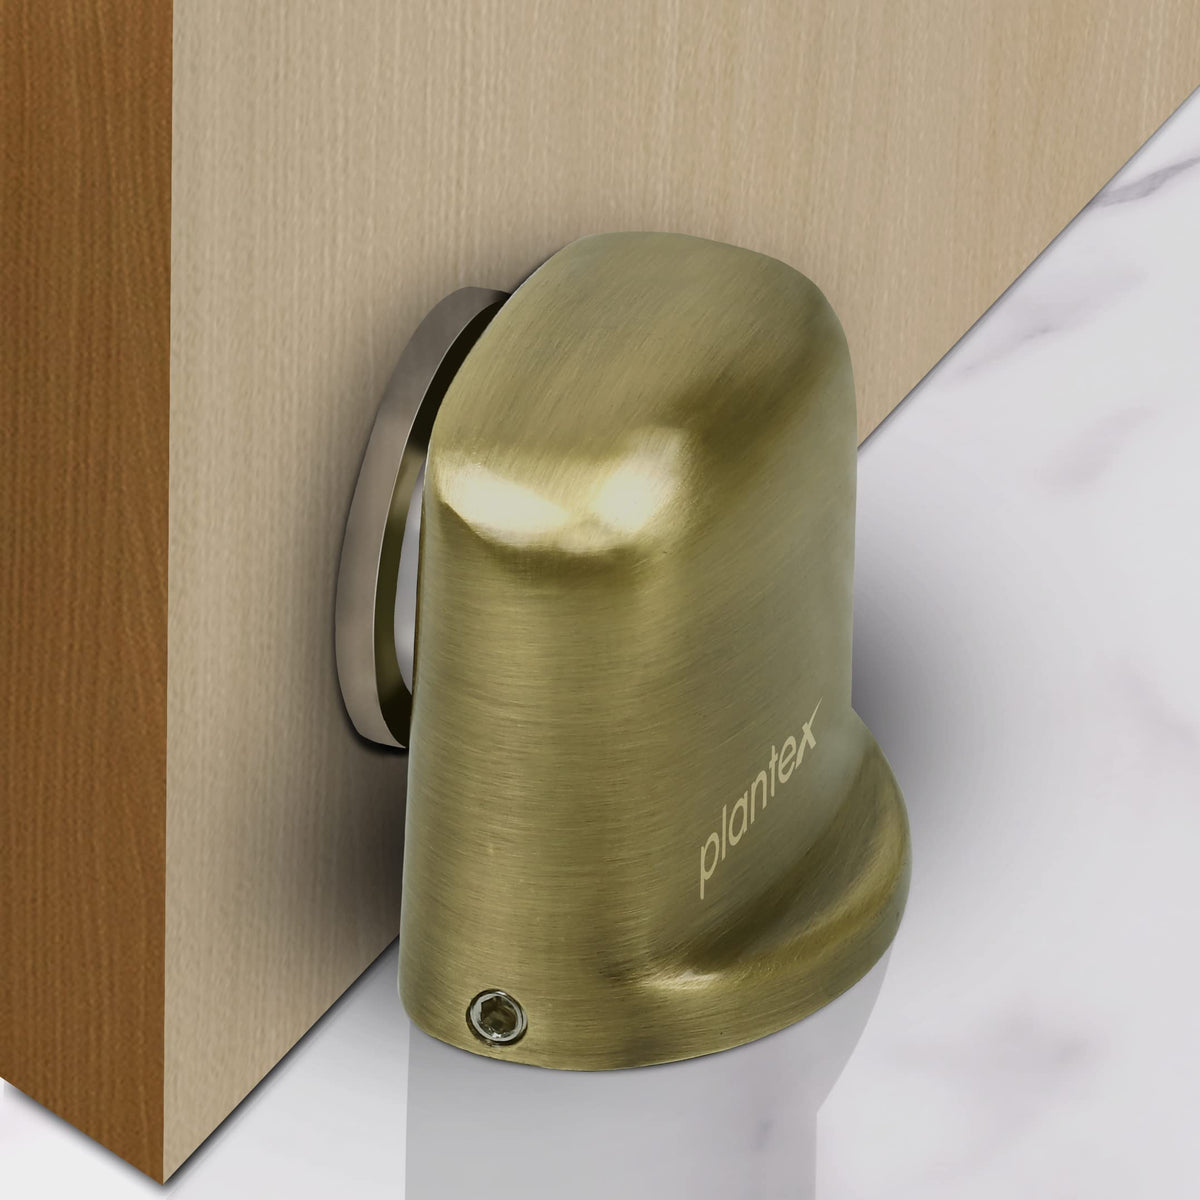 Plantex Heavy Duty Door Magnet Stopper/Door Catch Holder for Home/Office/Hotel, Floor Mounted Soft-Catcher to Hold Wooden/Glass/PVC Door - Pack of 20 (193 - Brass Antique)